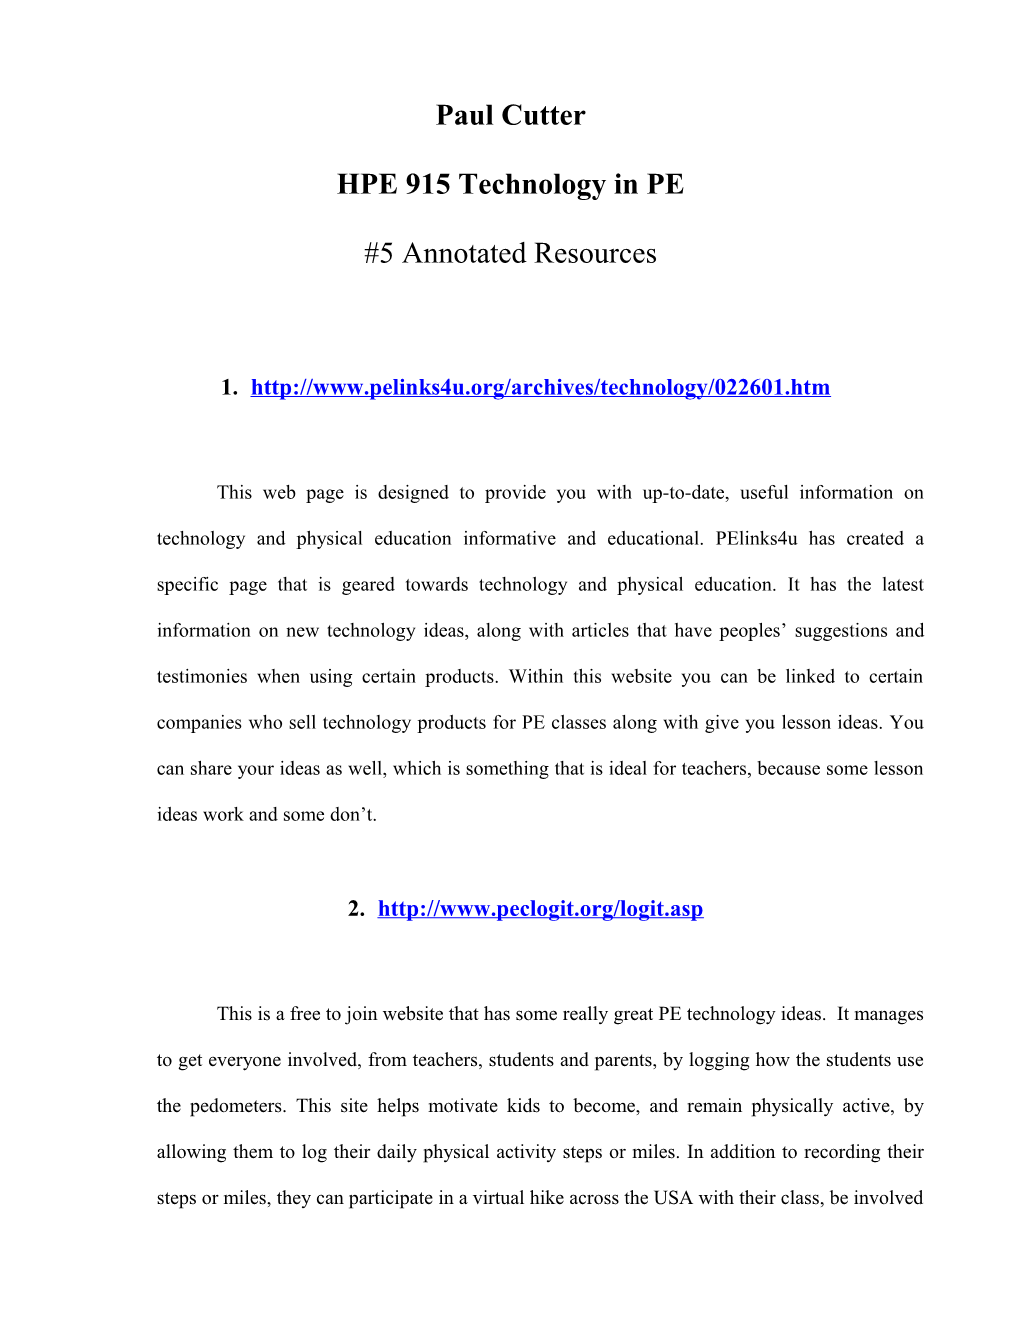 HPE 915 Technology in PE